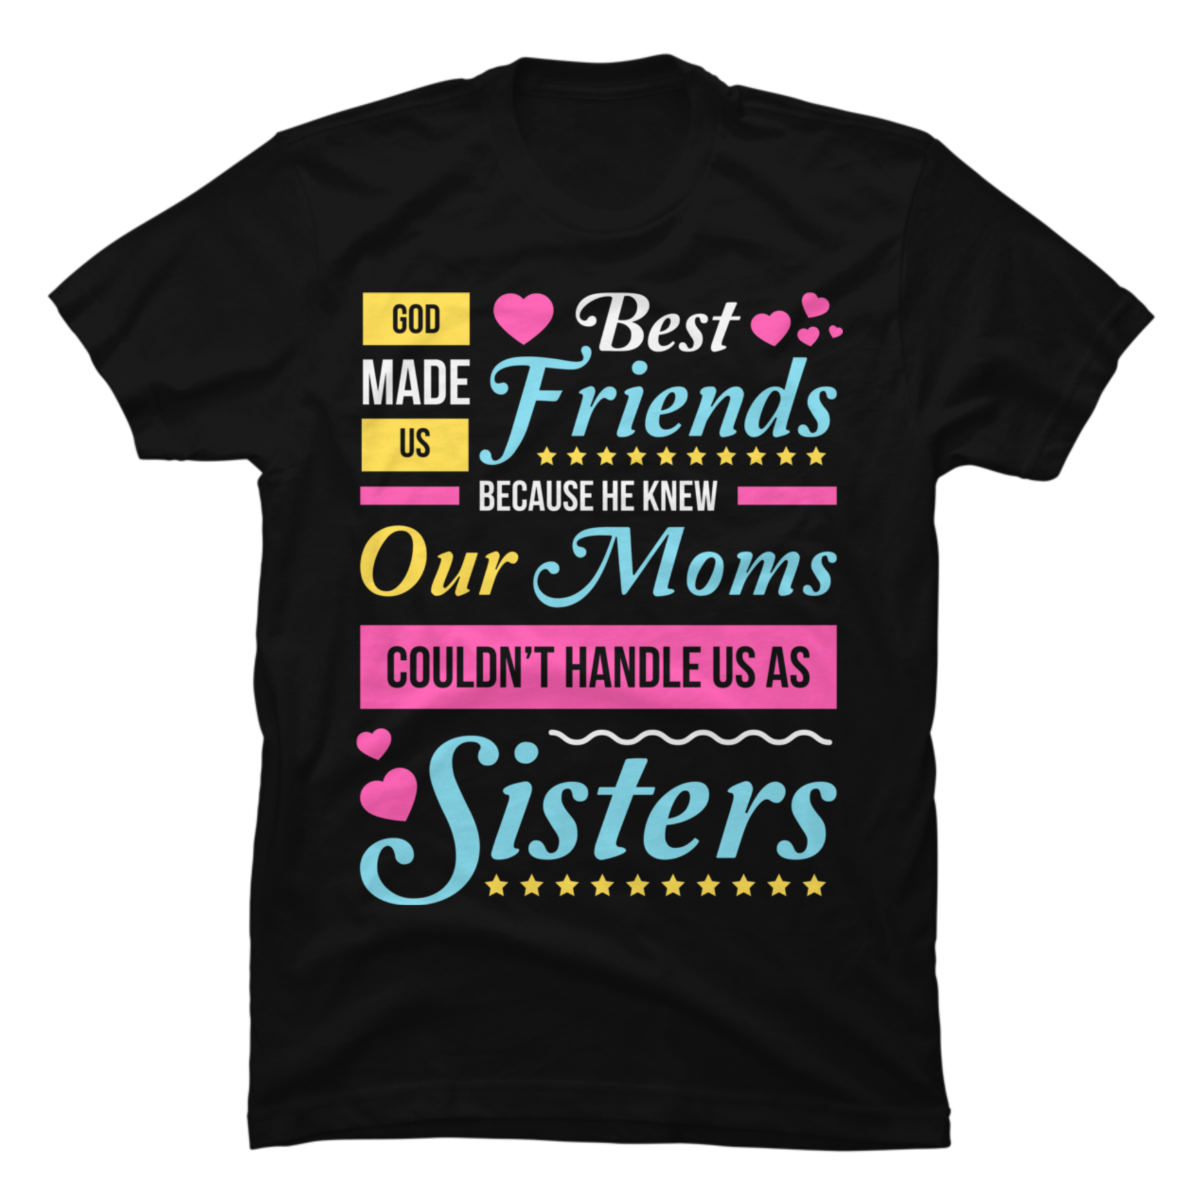 God Made Us Bffs - Buy t-shirt designs